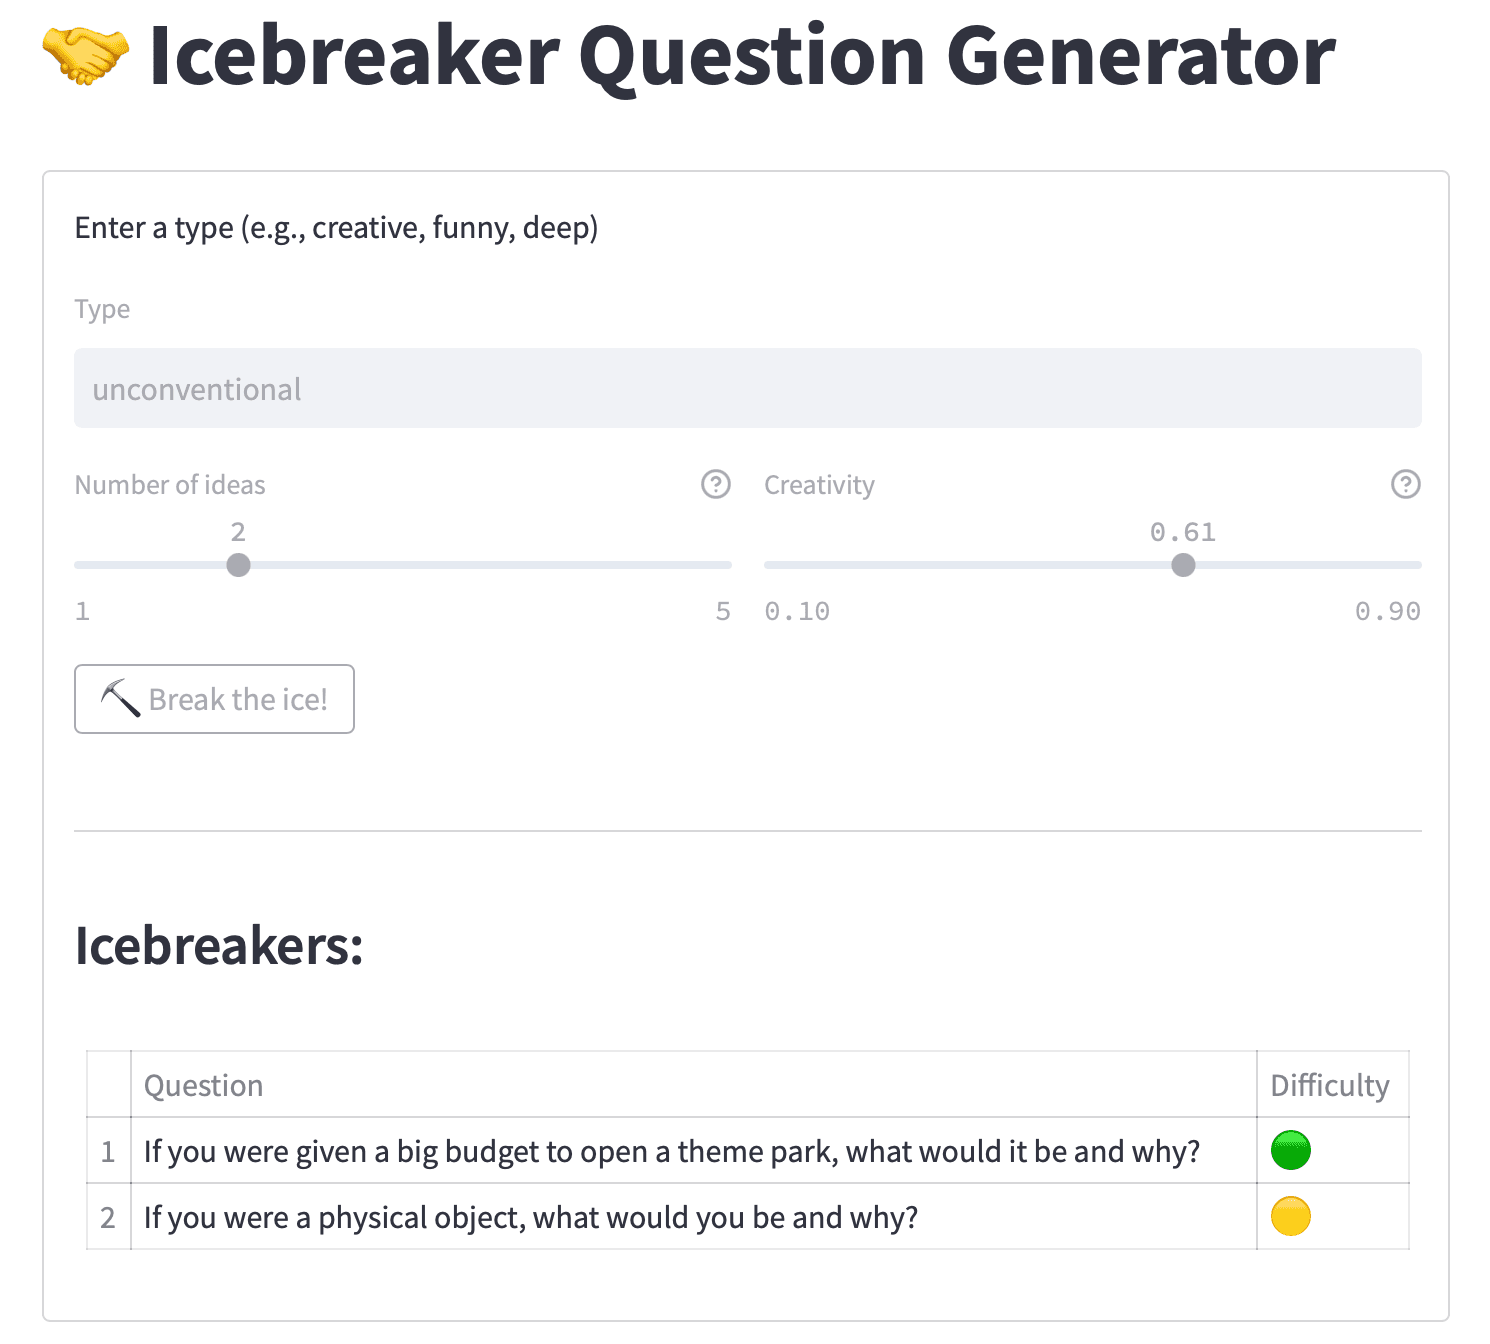 Icebreaker Question Generation